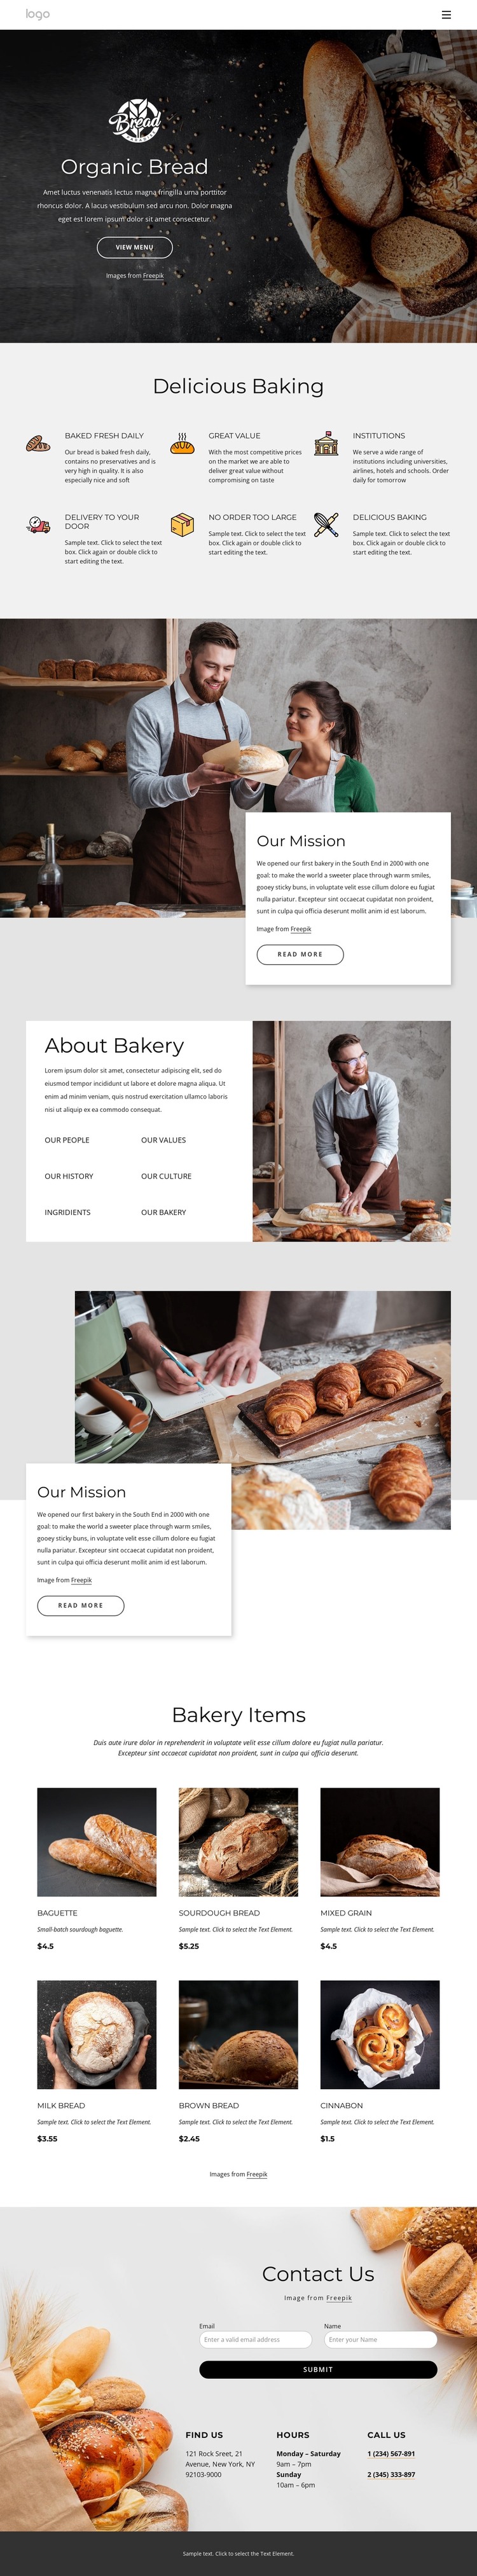 Bagels, buns, rolls, biscuits and loaf breads Web Design